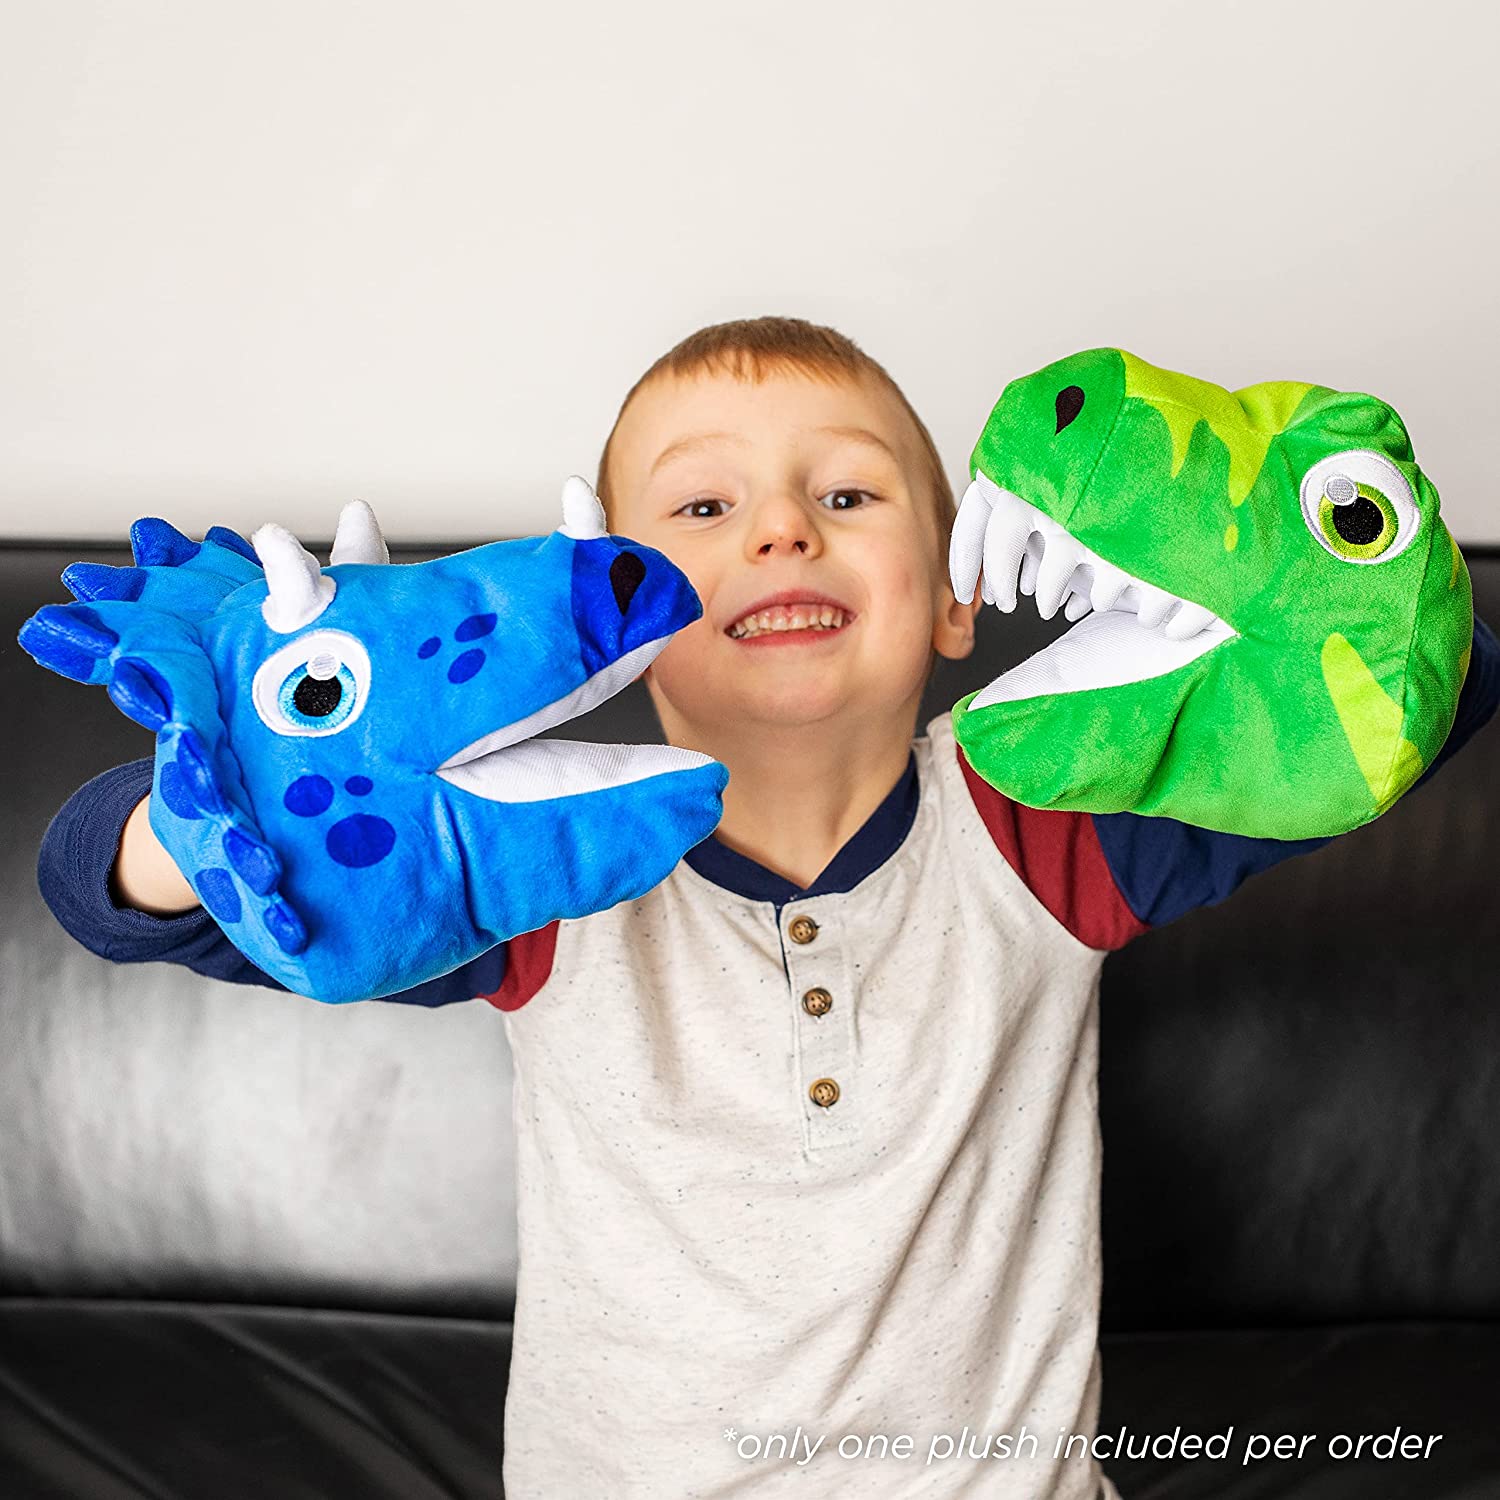 Itera Reversible Dino Plush Toy